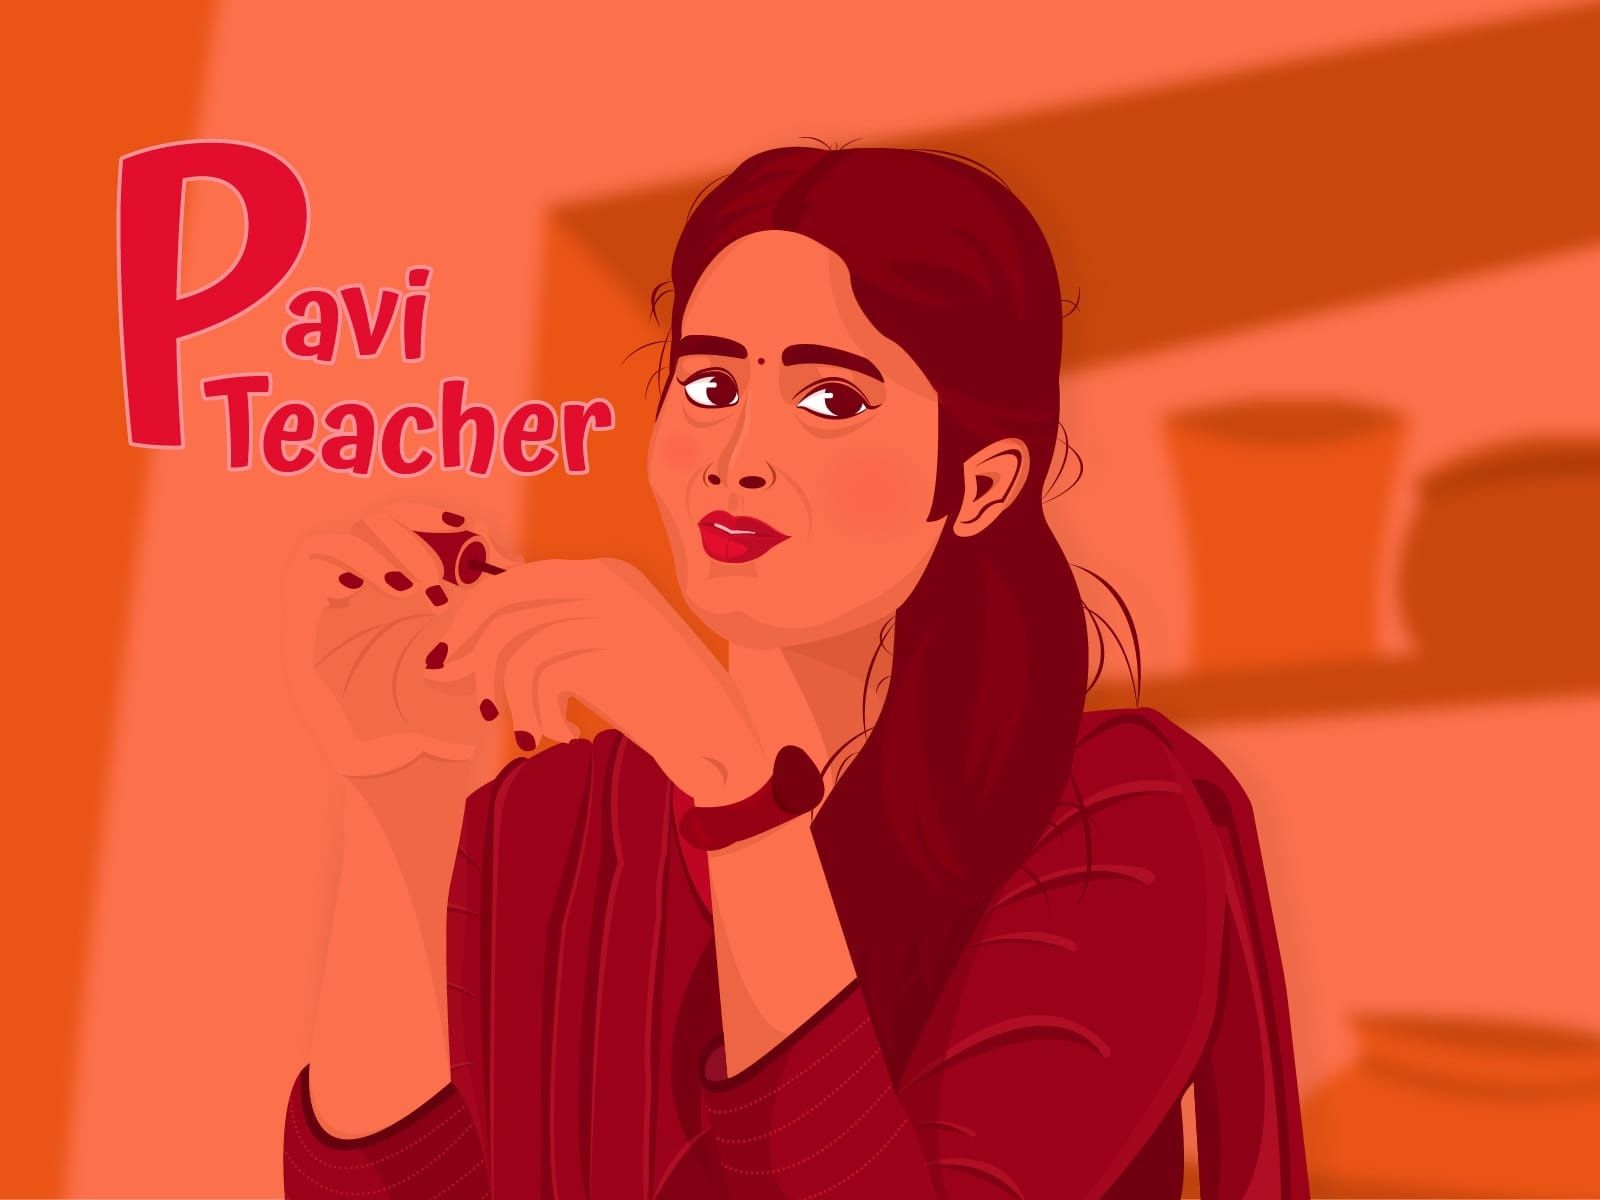 Pavi teacher